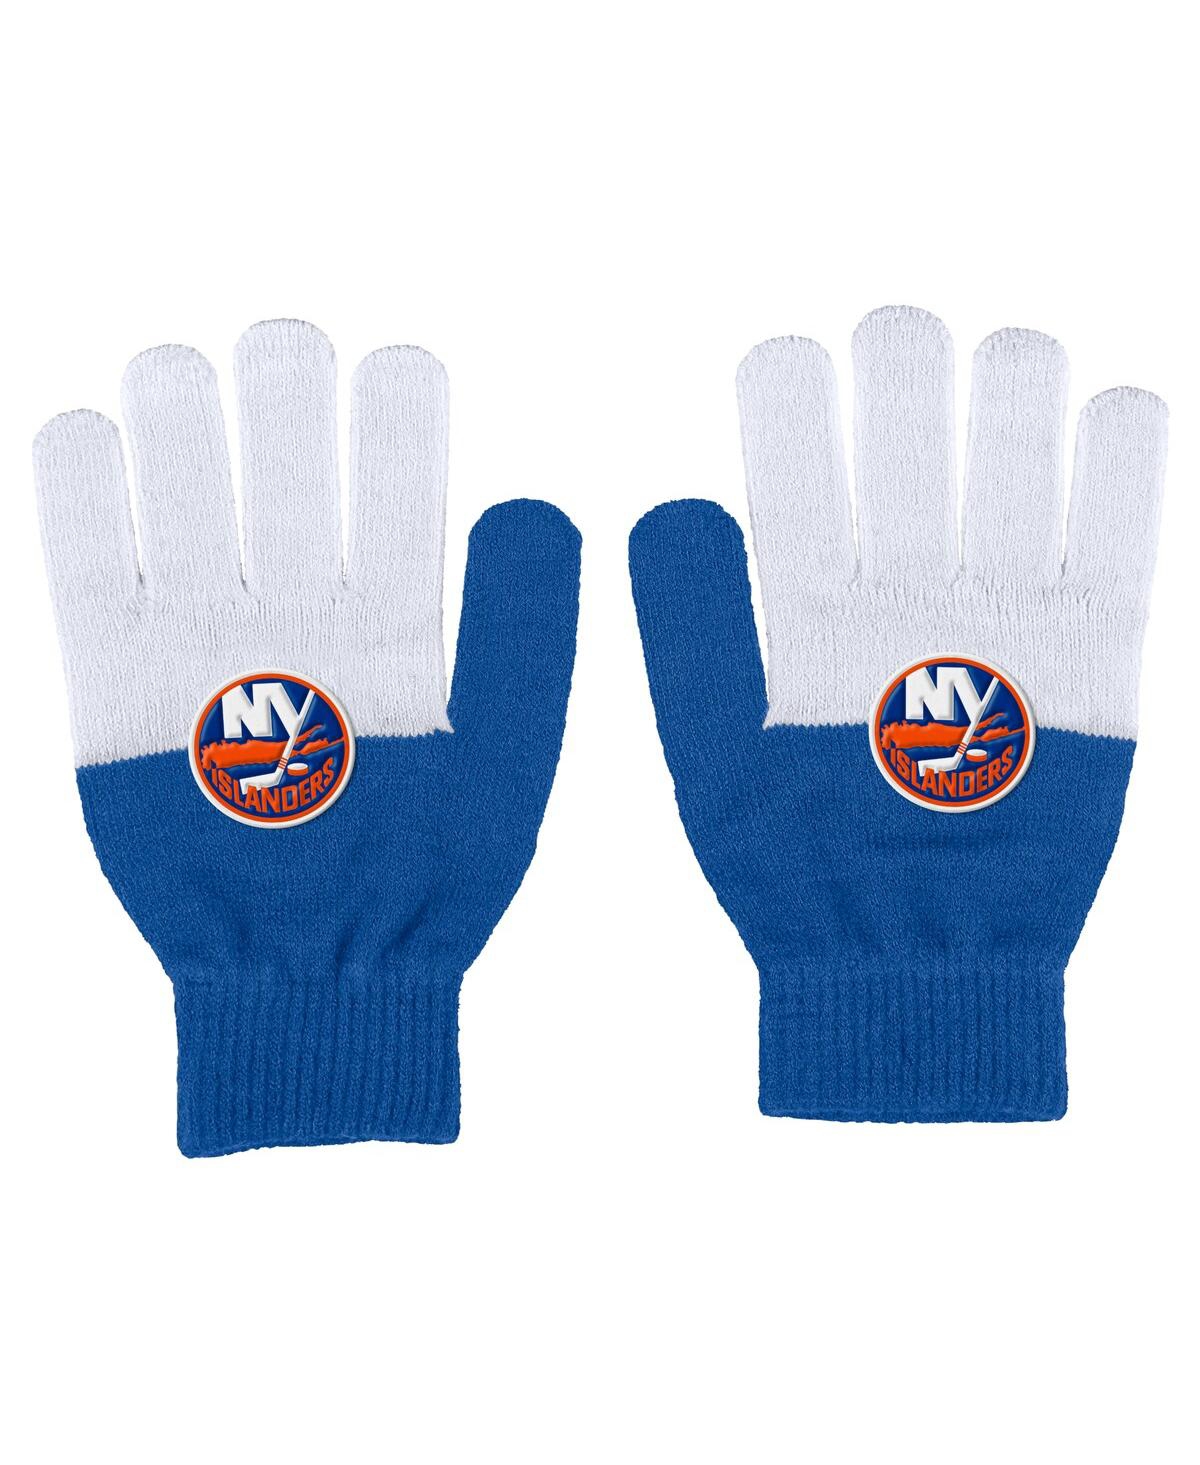 Women's Wear by Erin Andrews New York Islanders Color-Block Gloves - Blue, White